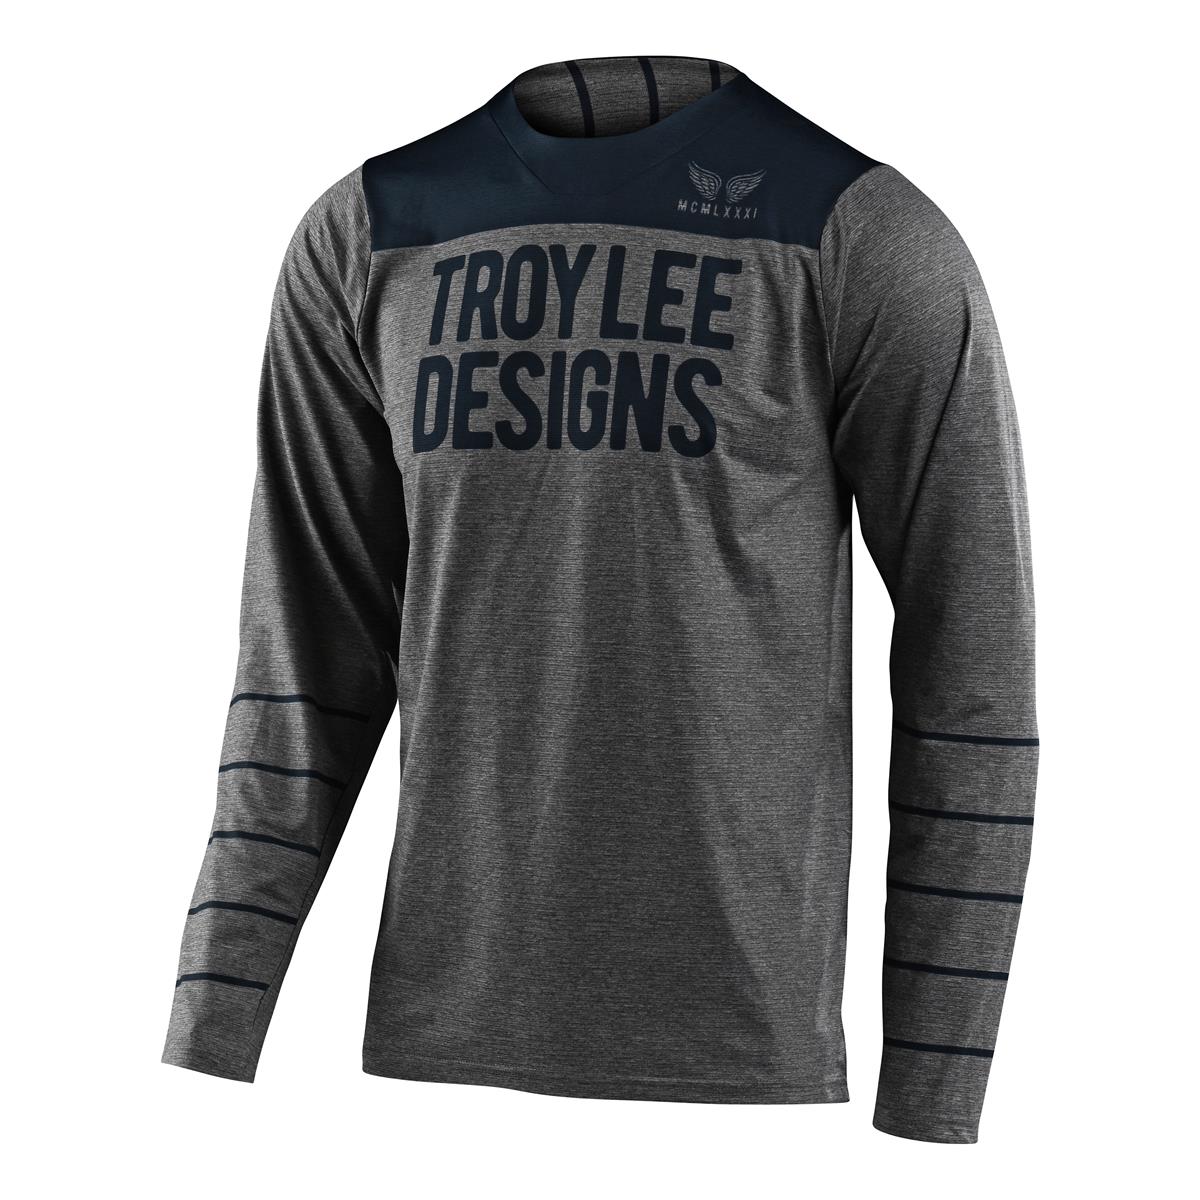 troy lee designs jersey mtb